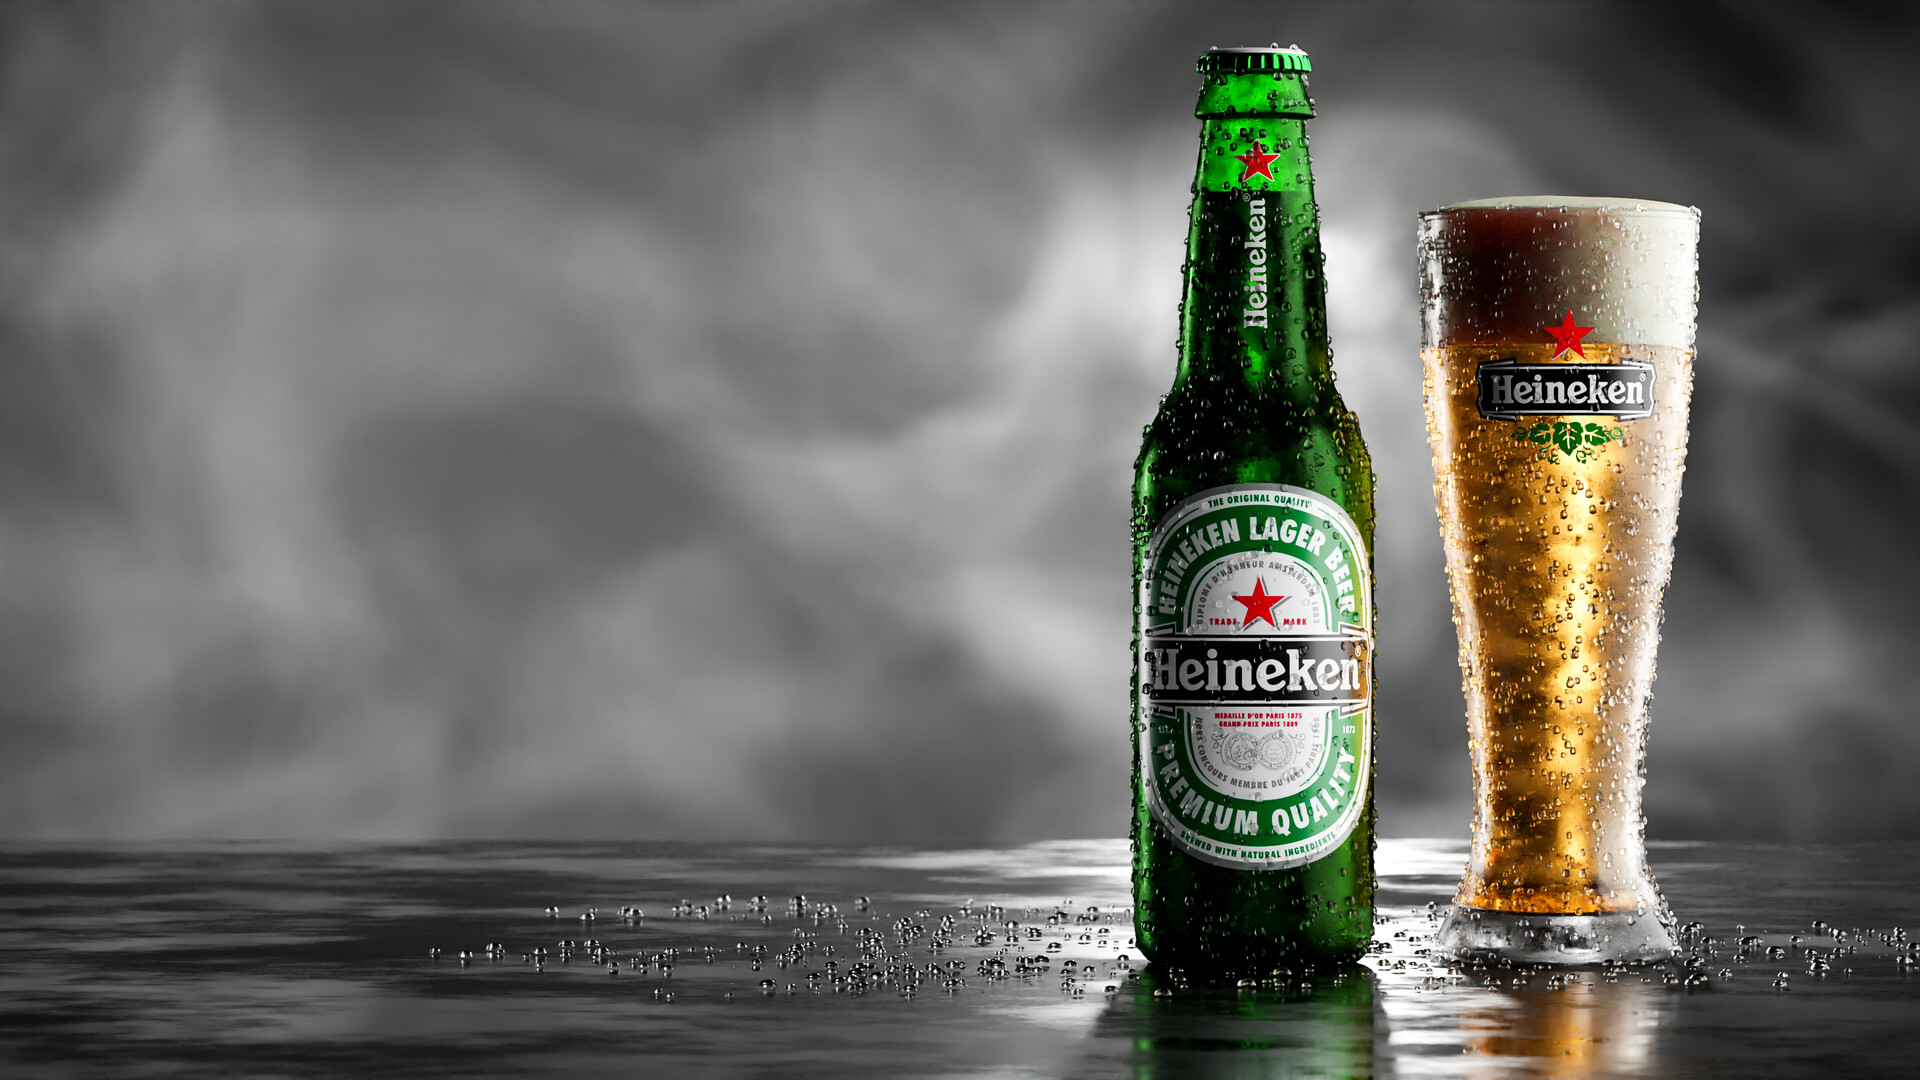 Hashtag | Beer wallpaper, Heineken beer, Beer advertising